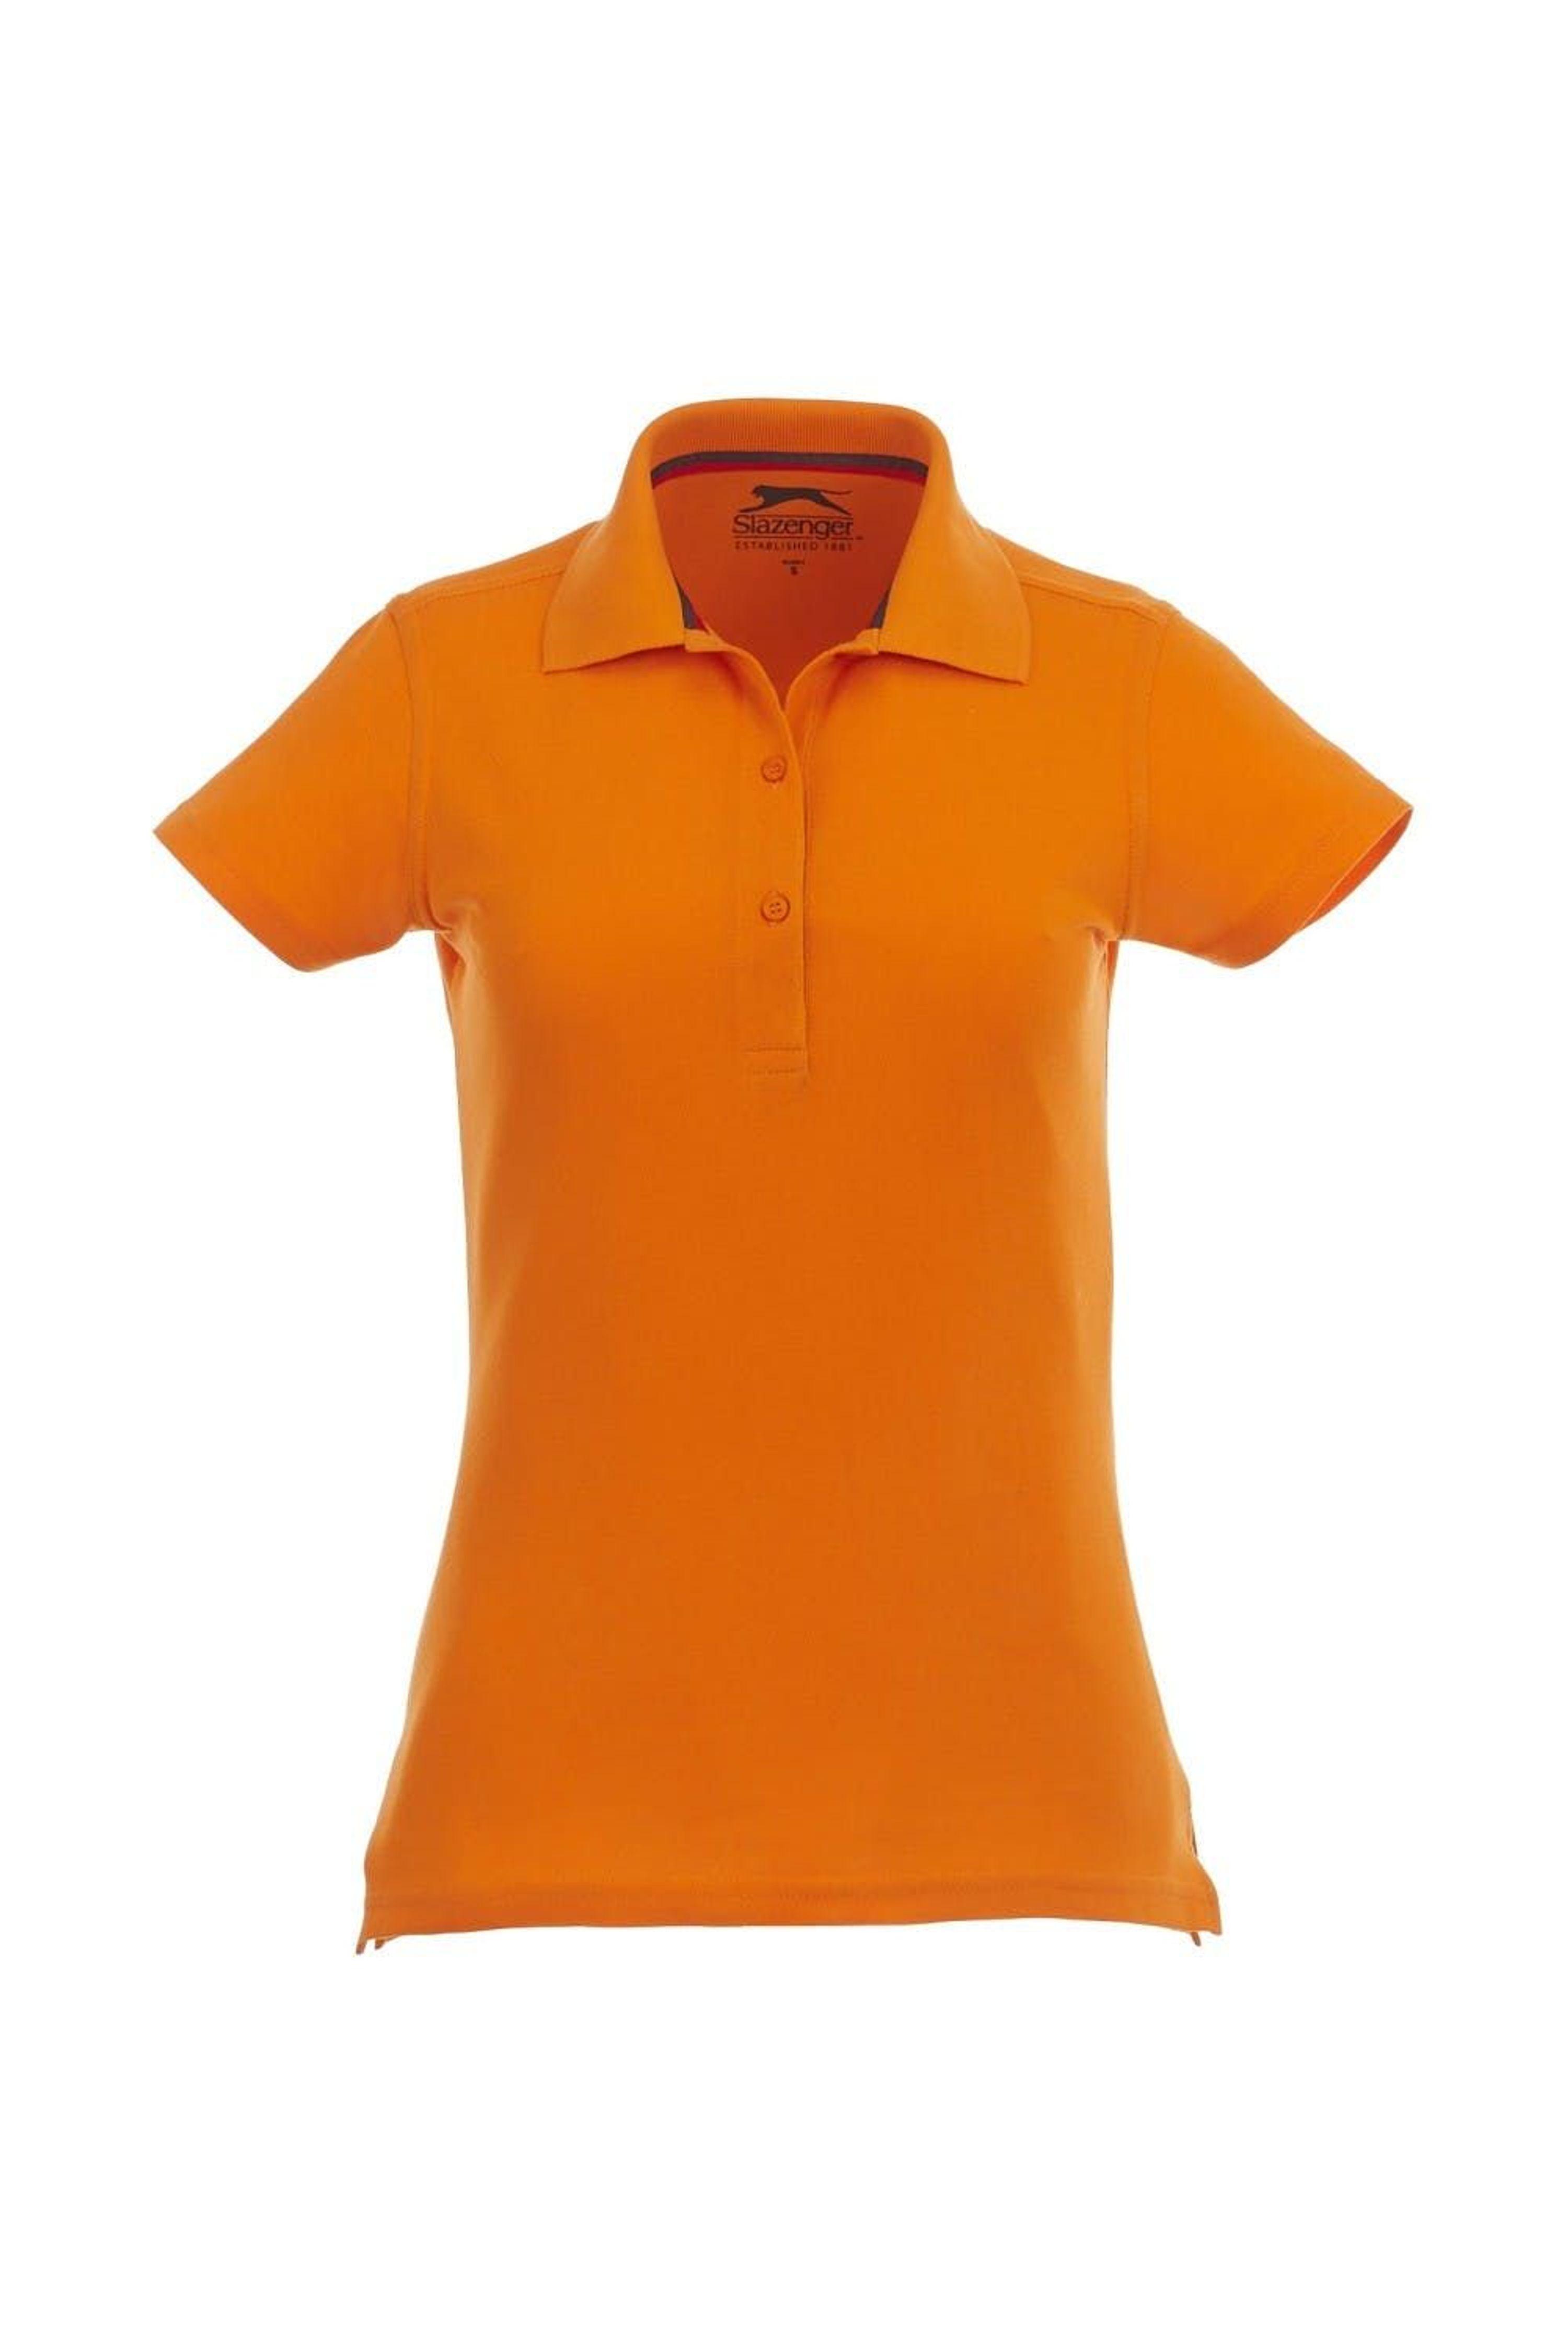 Slazenger Advantage Short Sleeve Polo in Orange | Lyst